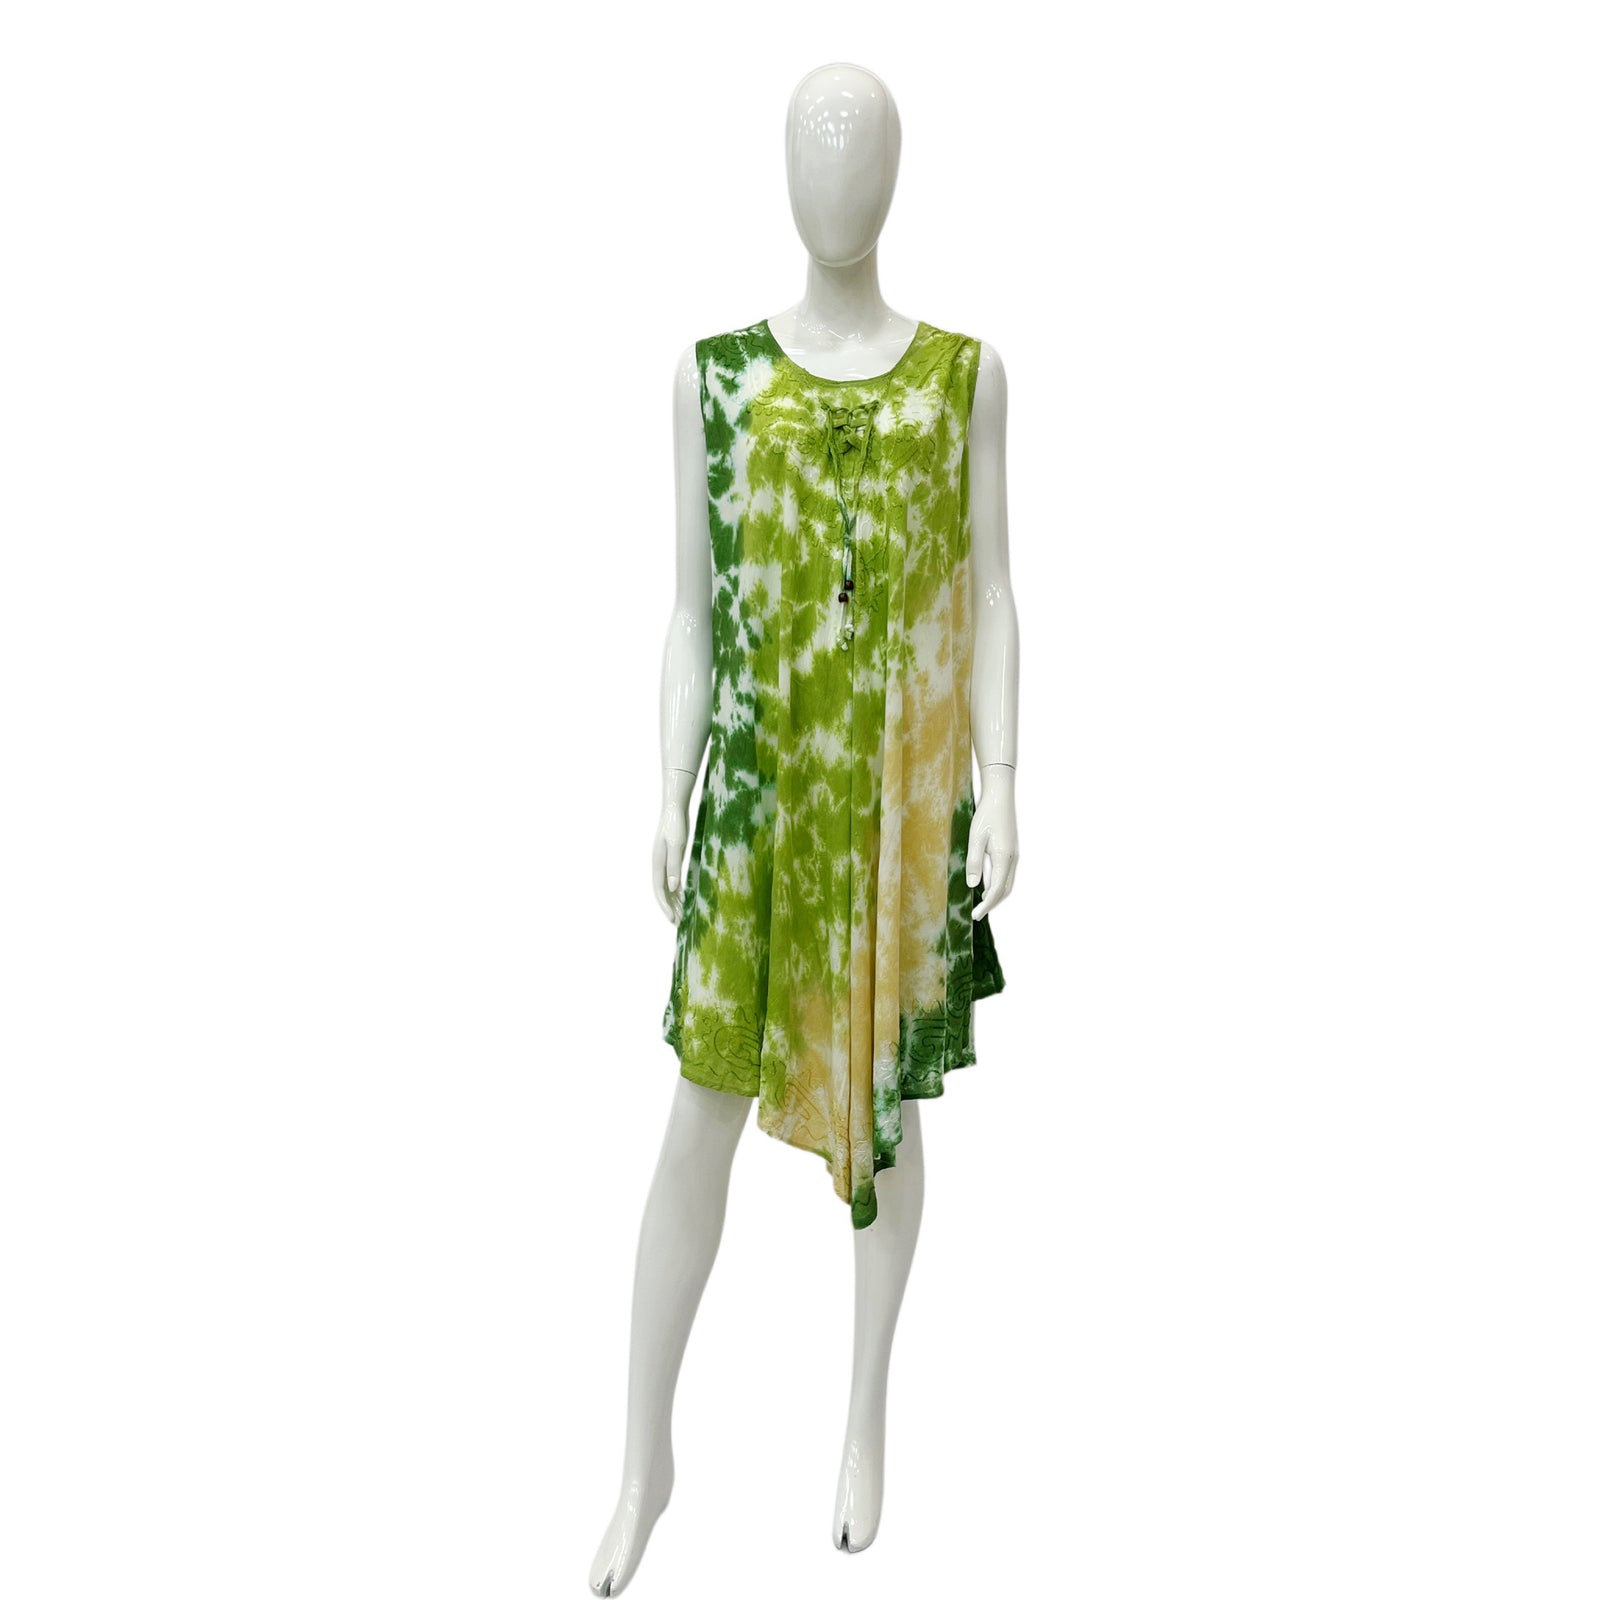 Wholesale Women's Dresses Rayon Pastel Tie Dye with Embedded Sl Umbrella 120Gms Oc 6-36-Case O-S Ari NWa8